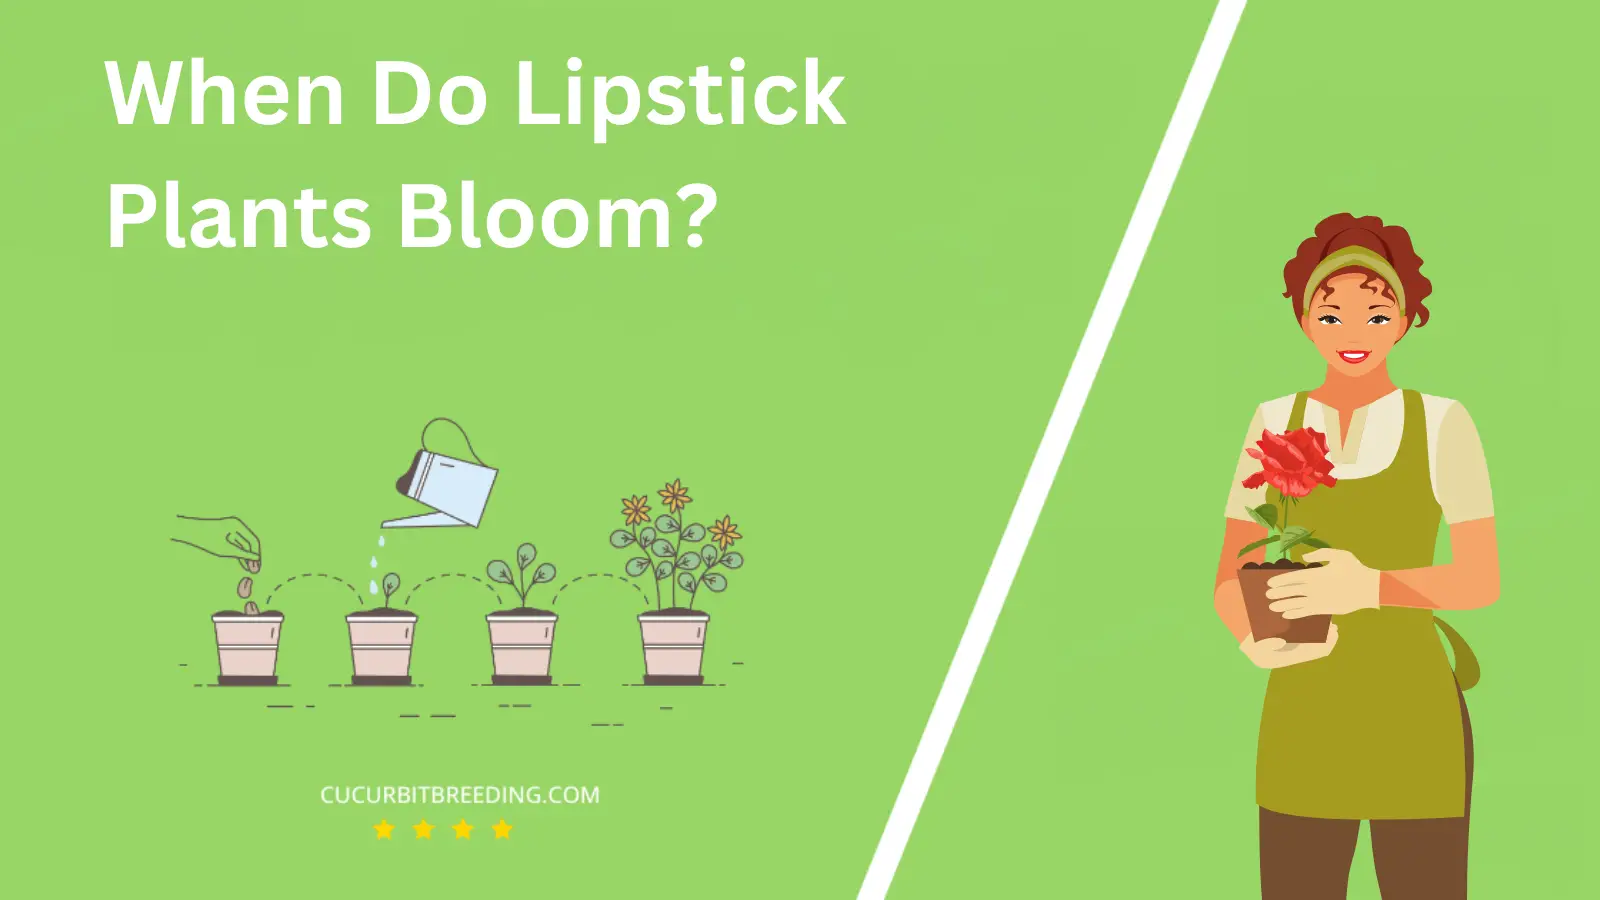 When Do Lipstick Plants Bloom?